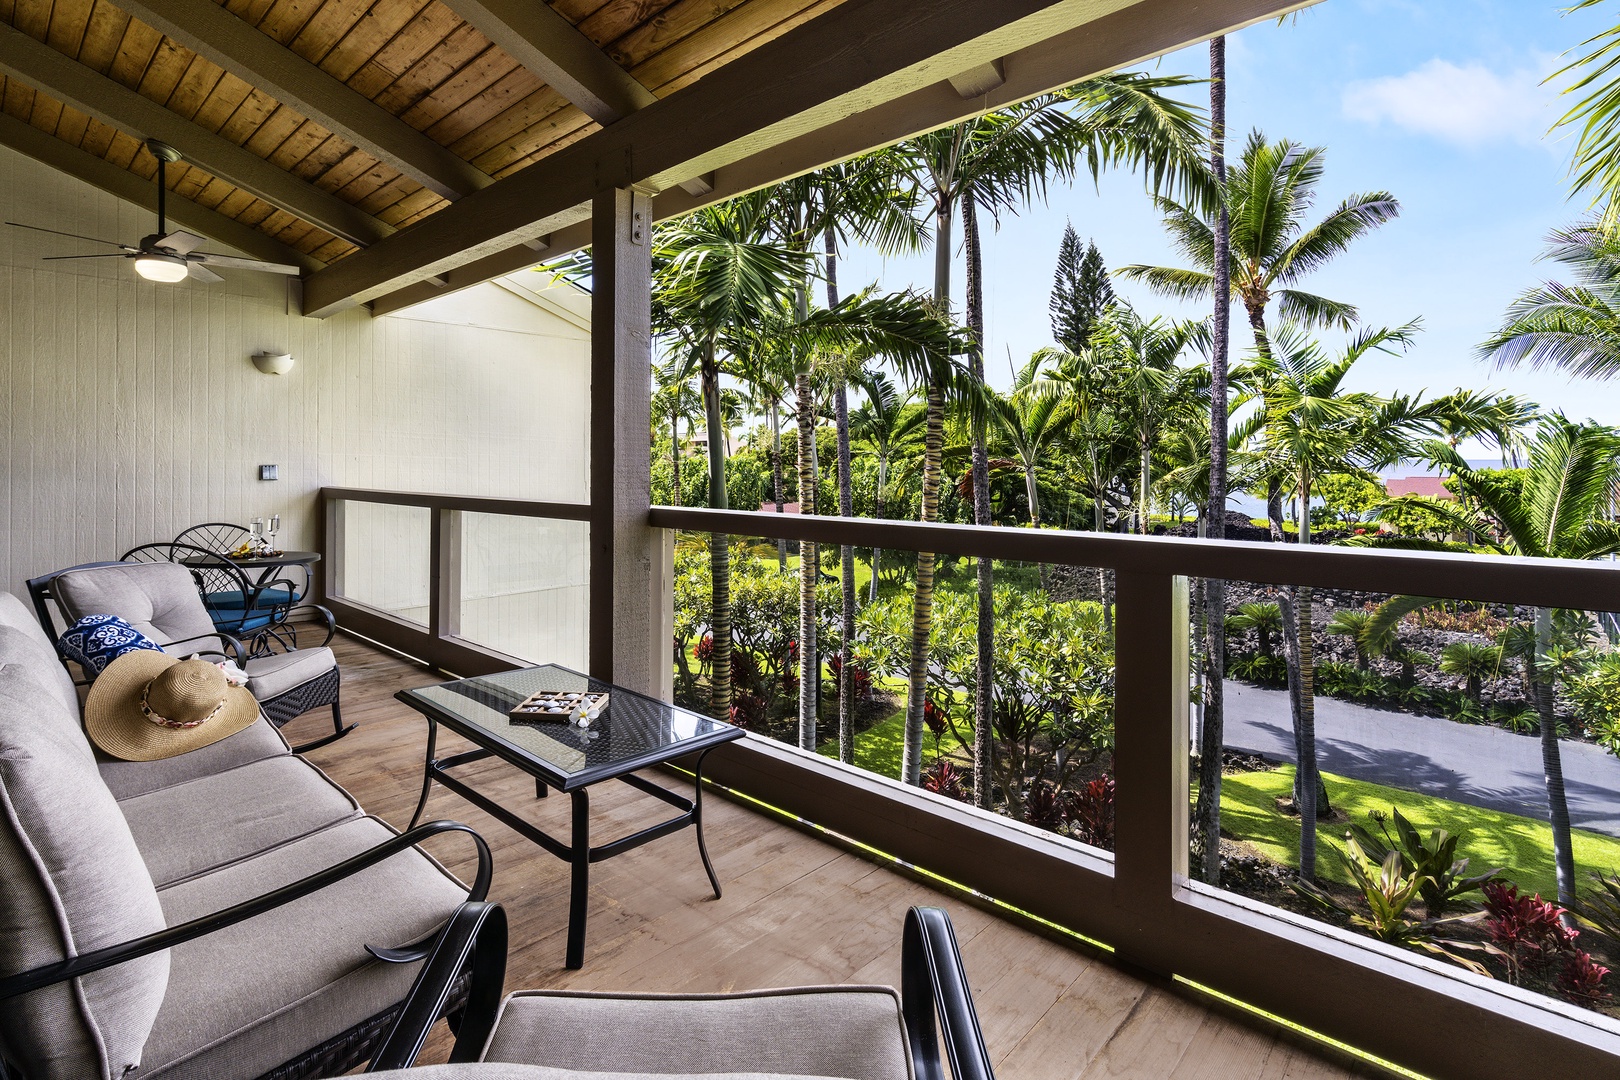 Kailua Kona Vacation Rentals, Keauhou Kona Surf & Racquet 9303 - Views of paradise!~